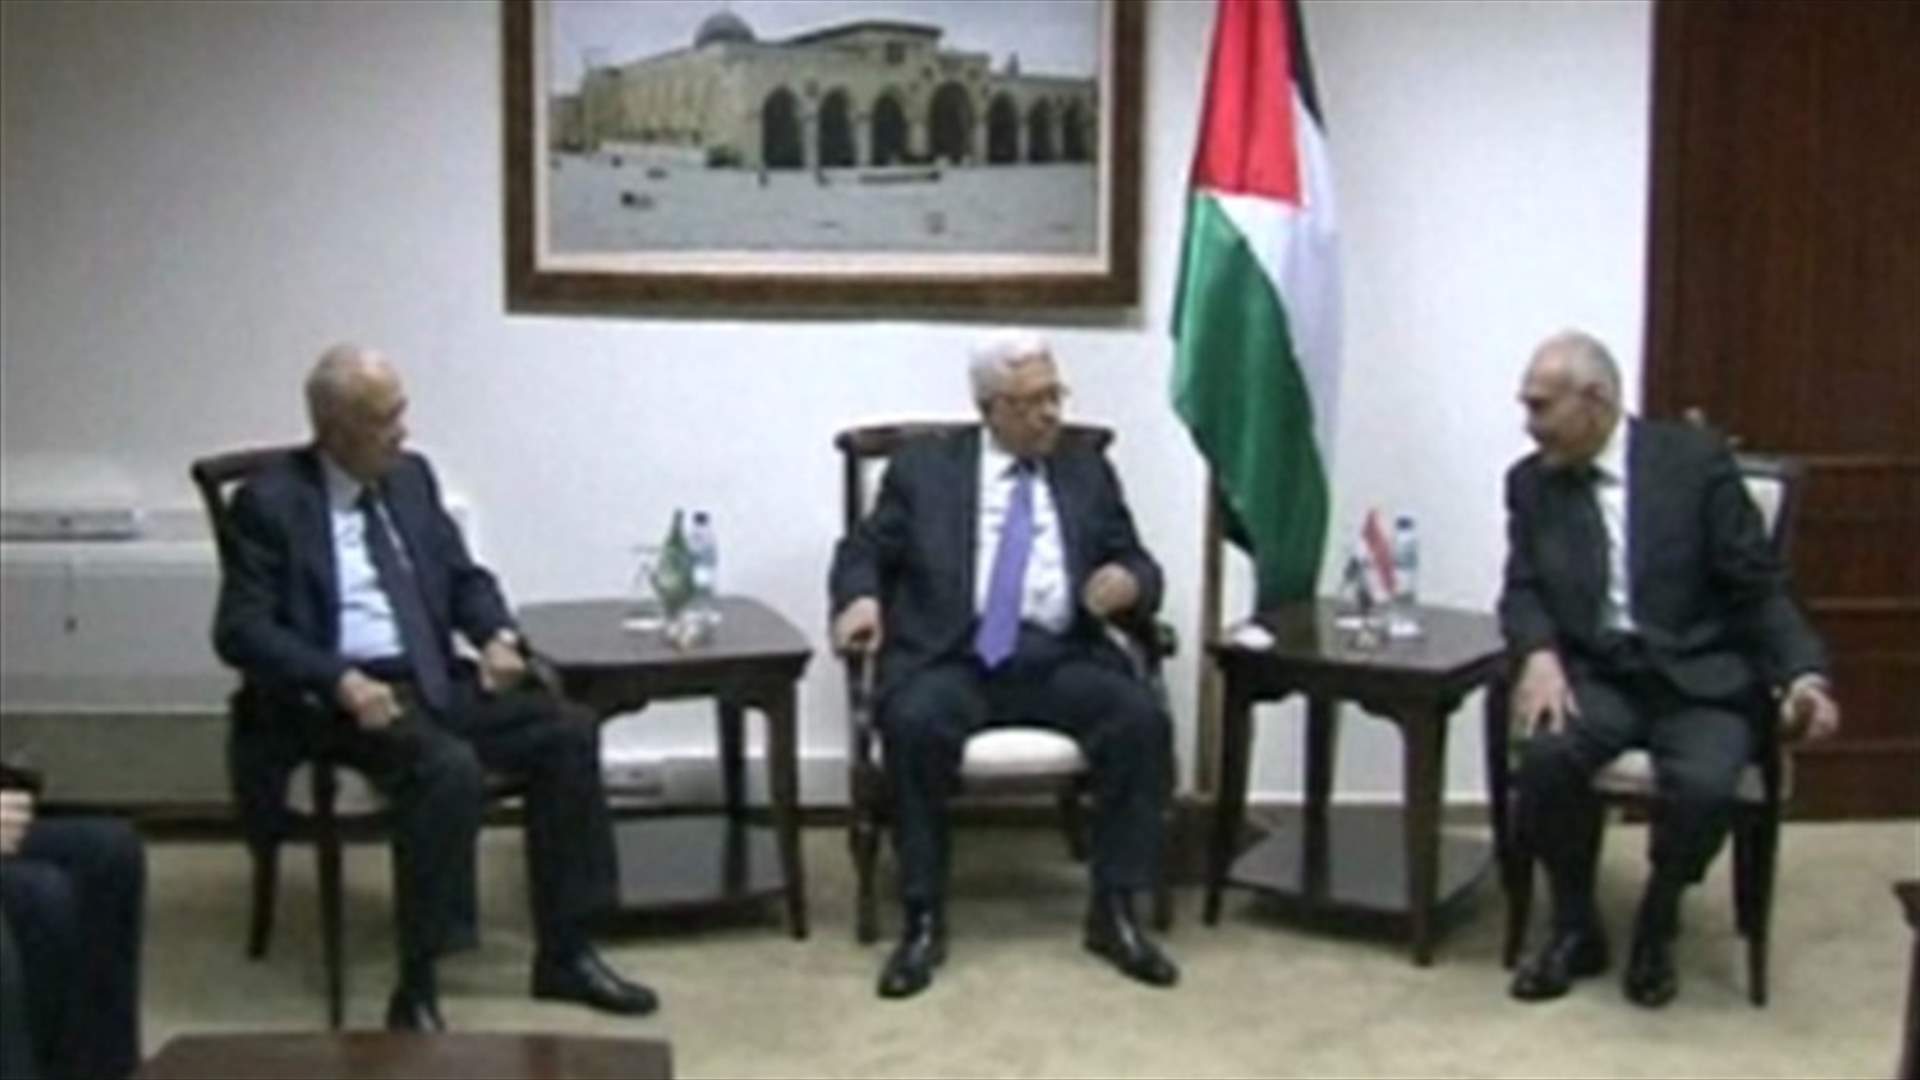 No Arab bailout aid yet, Elaraby tells West Bank Palestinians